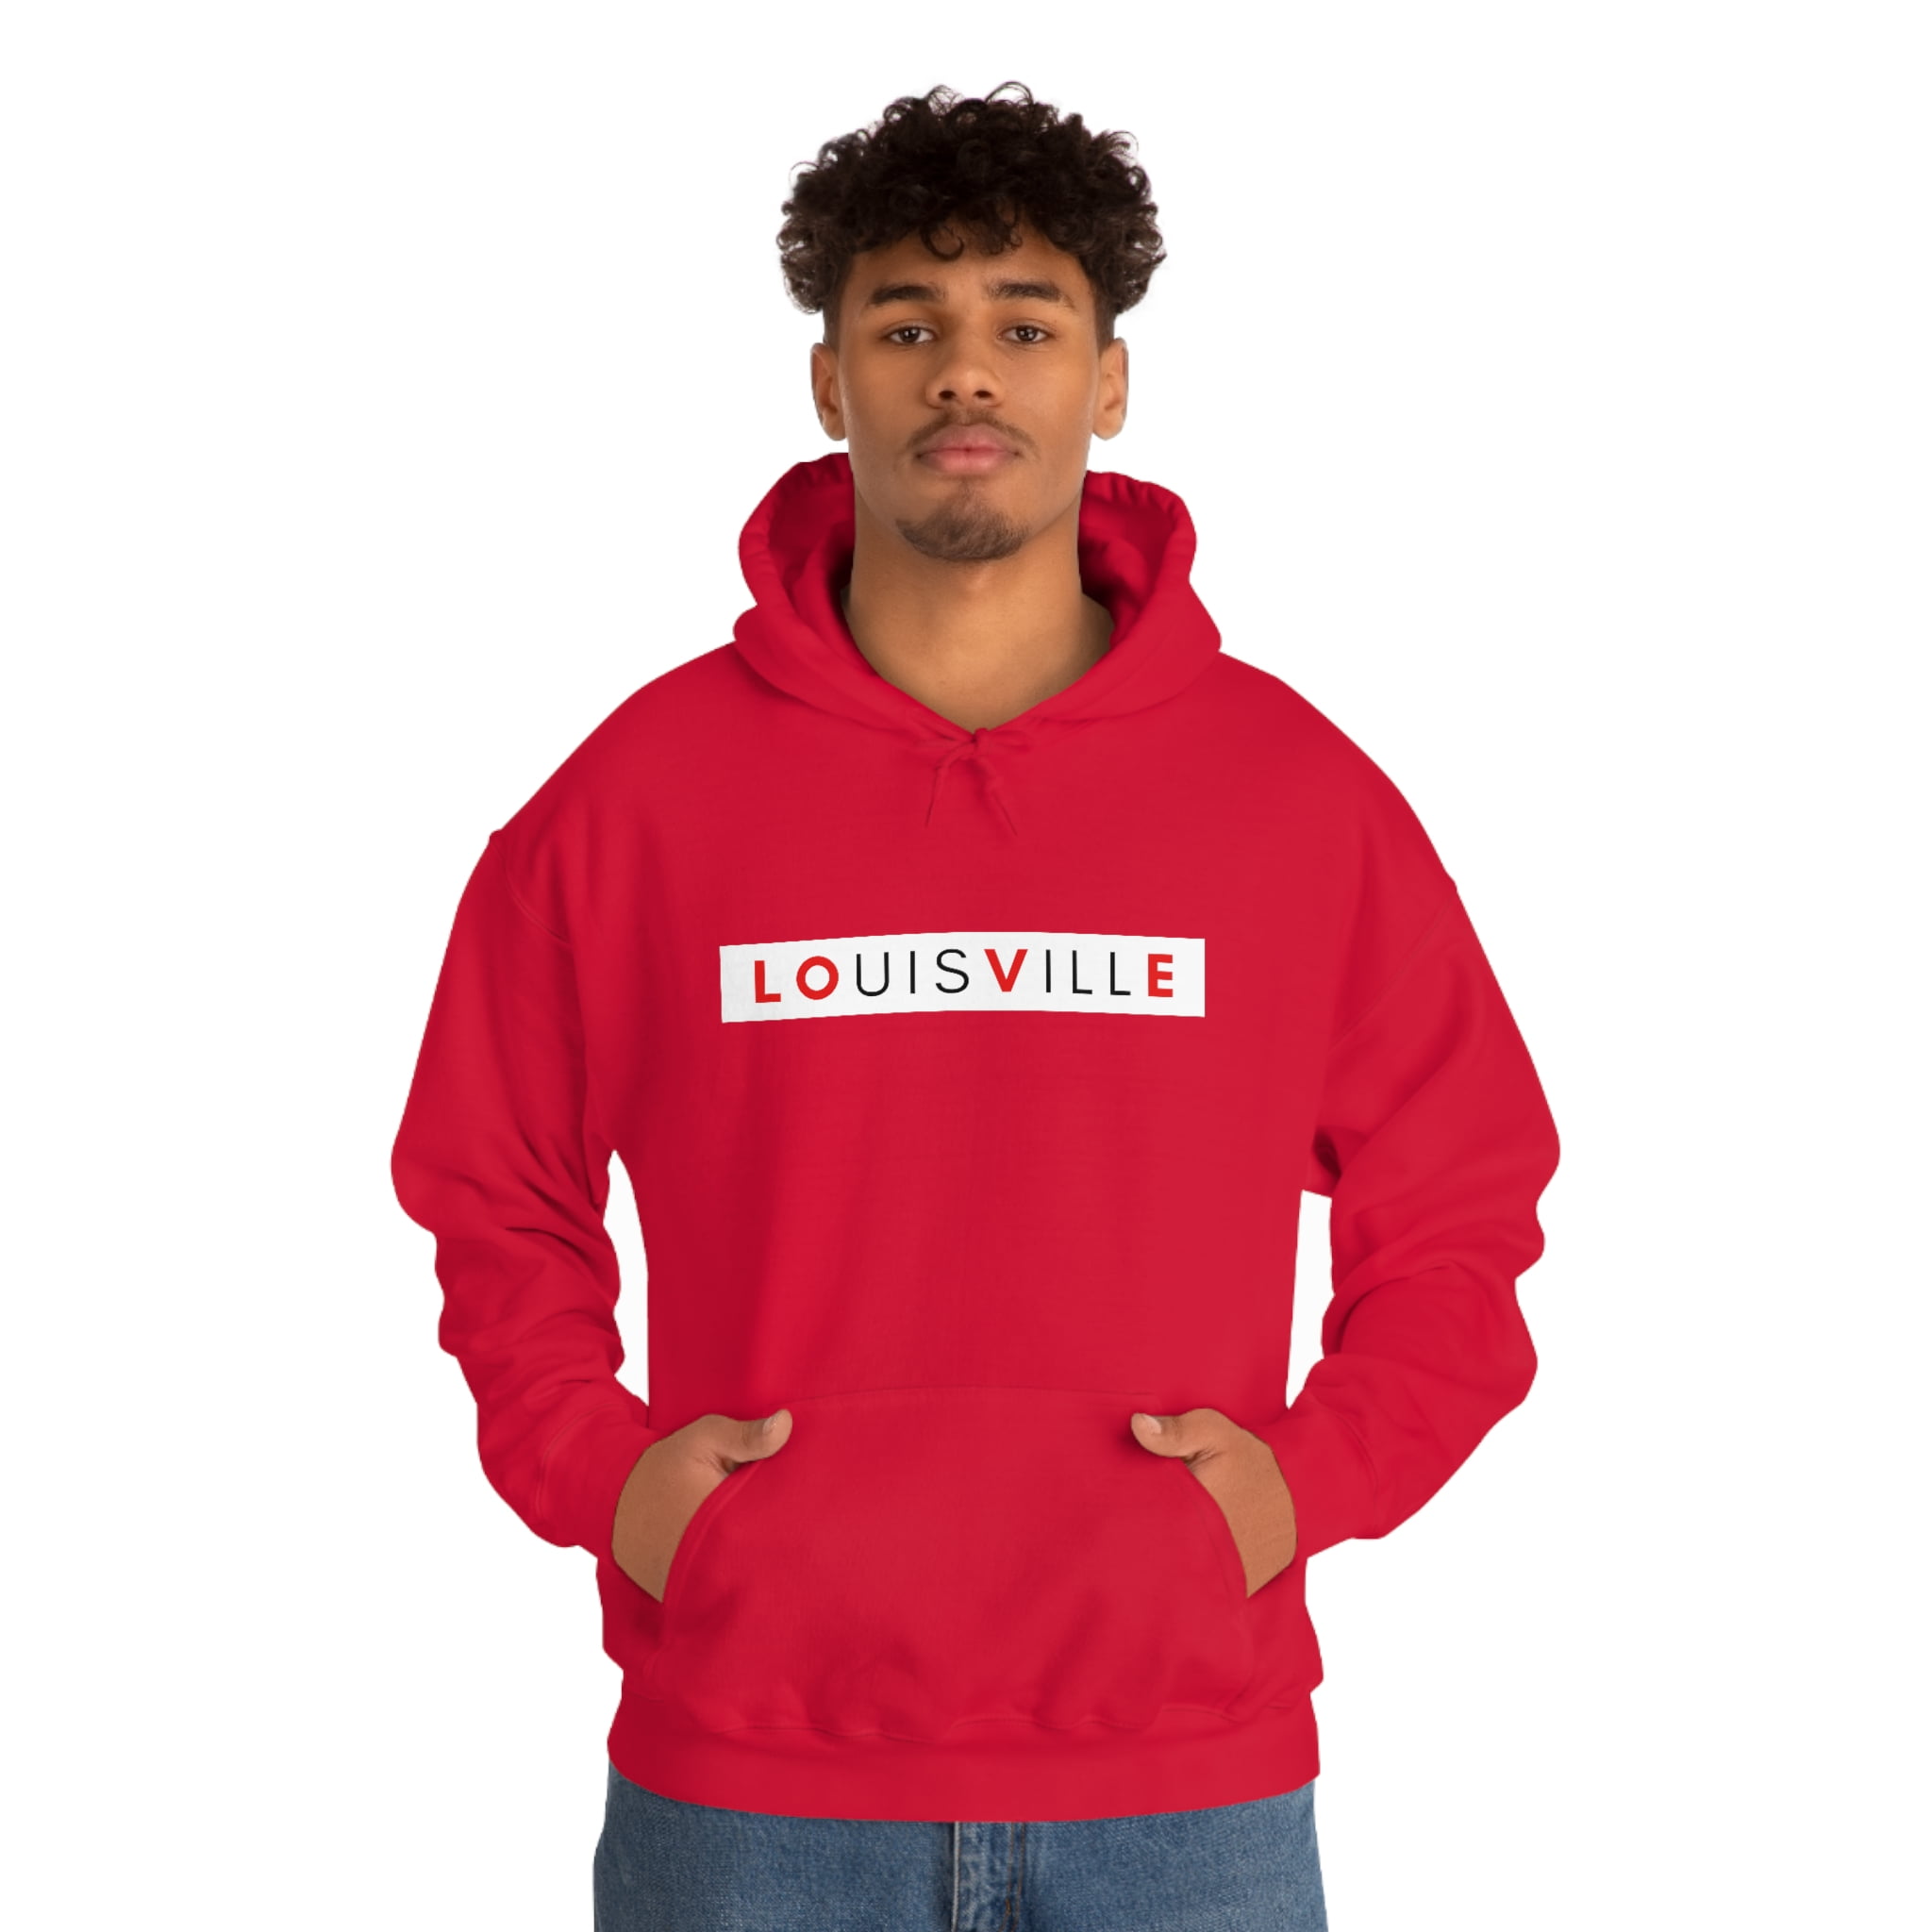 Artix - Plus Sweatshirts and Hoodies - Louisville 